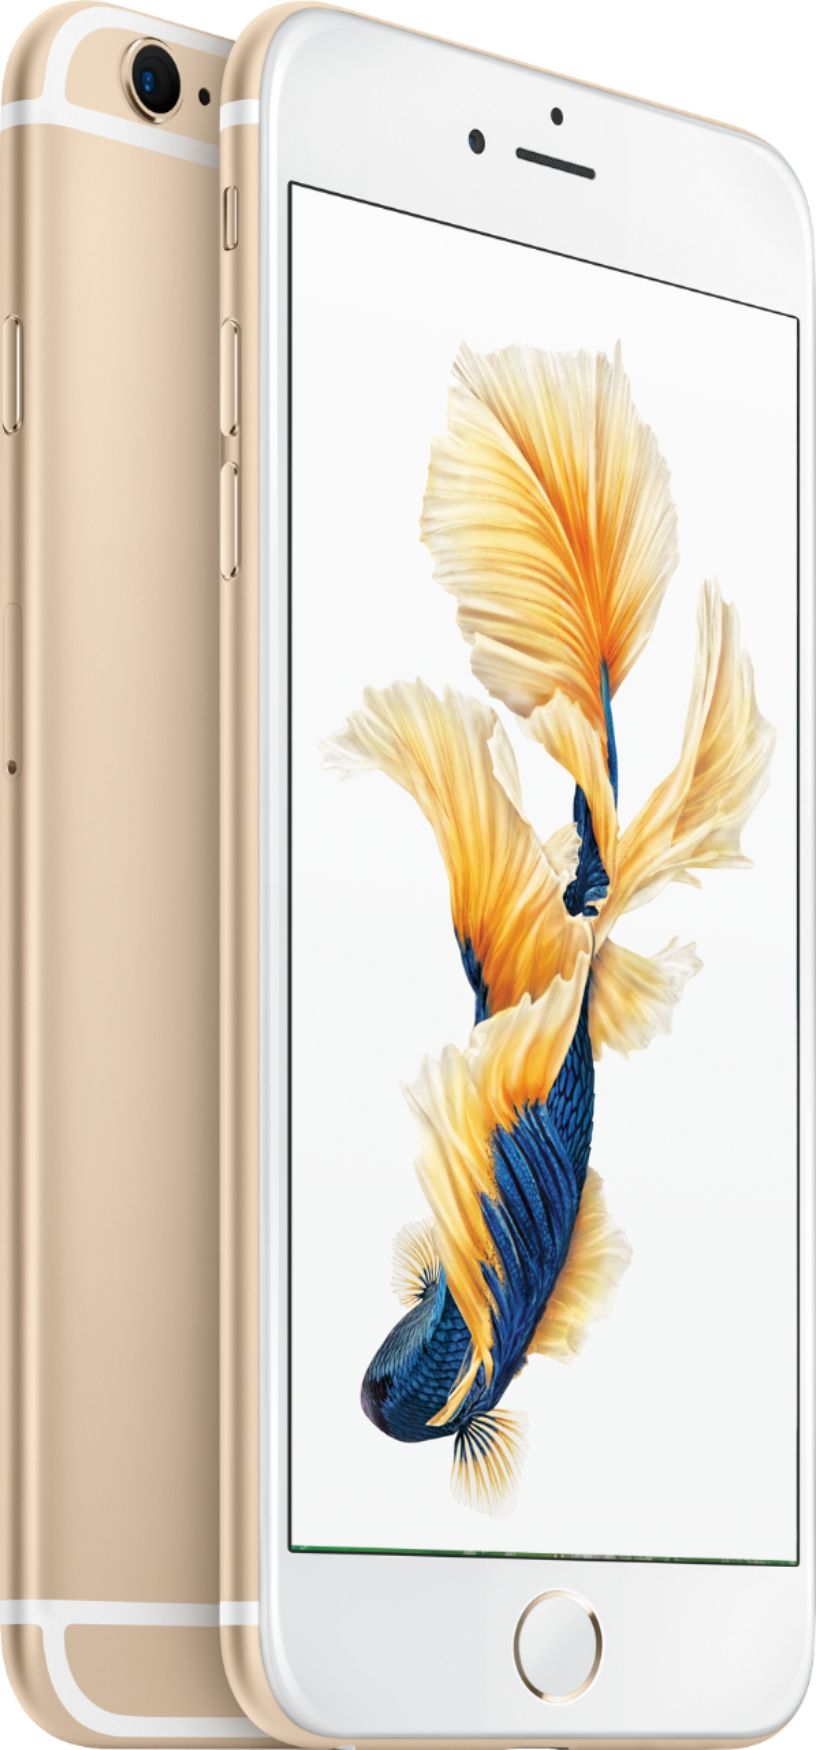 Best Buy: Apple iPhone 6s Plus 128GB Gold (Verizon) MKWH2LL/A